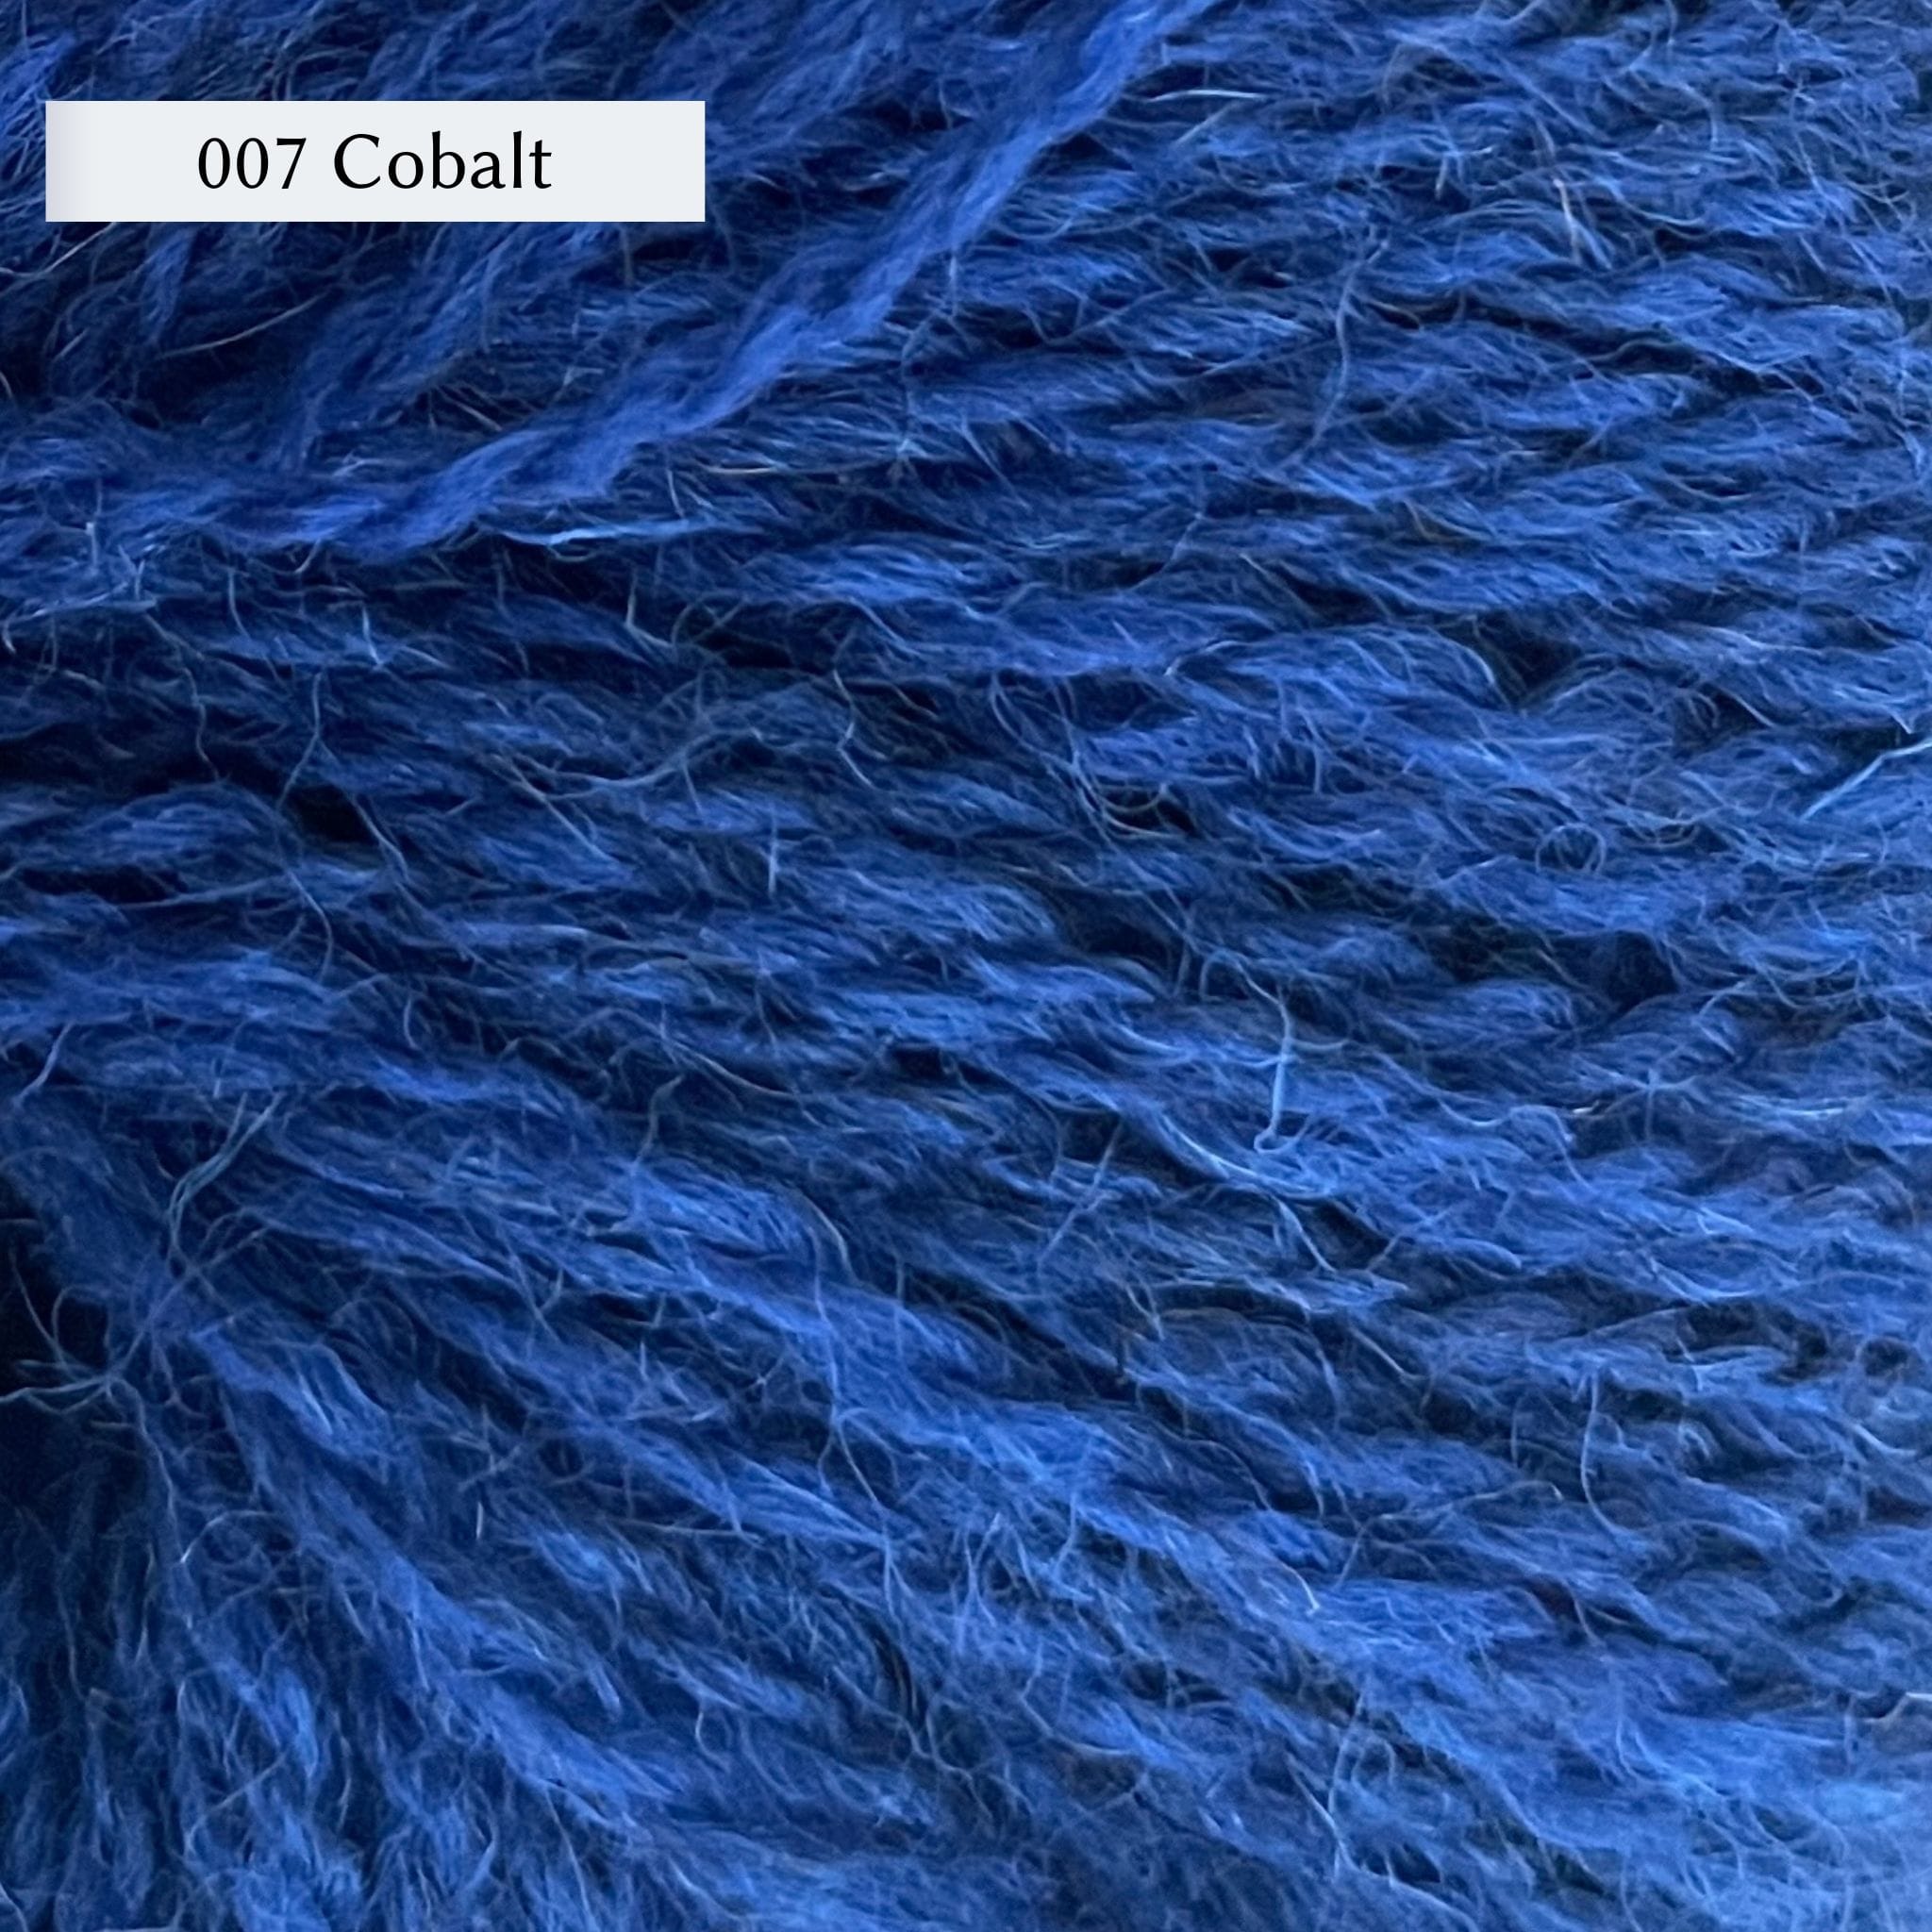 Wensleydale Longwool Sheep Shop Tweed 4 ply, a fingering weight yarn, in color 007 Cobalt, a royal blue